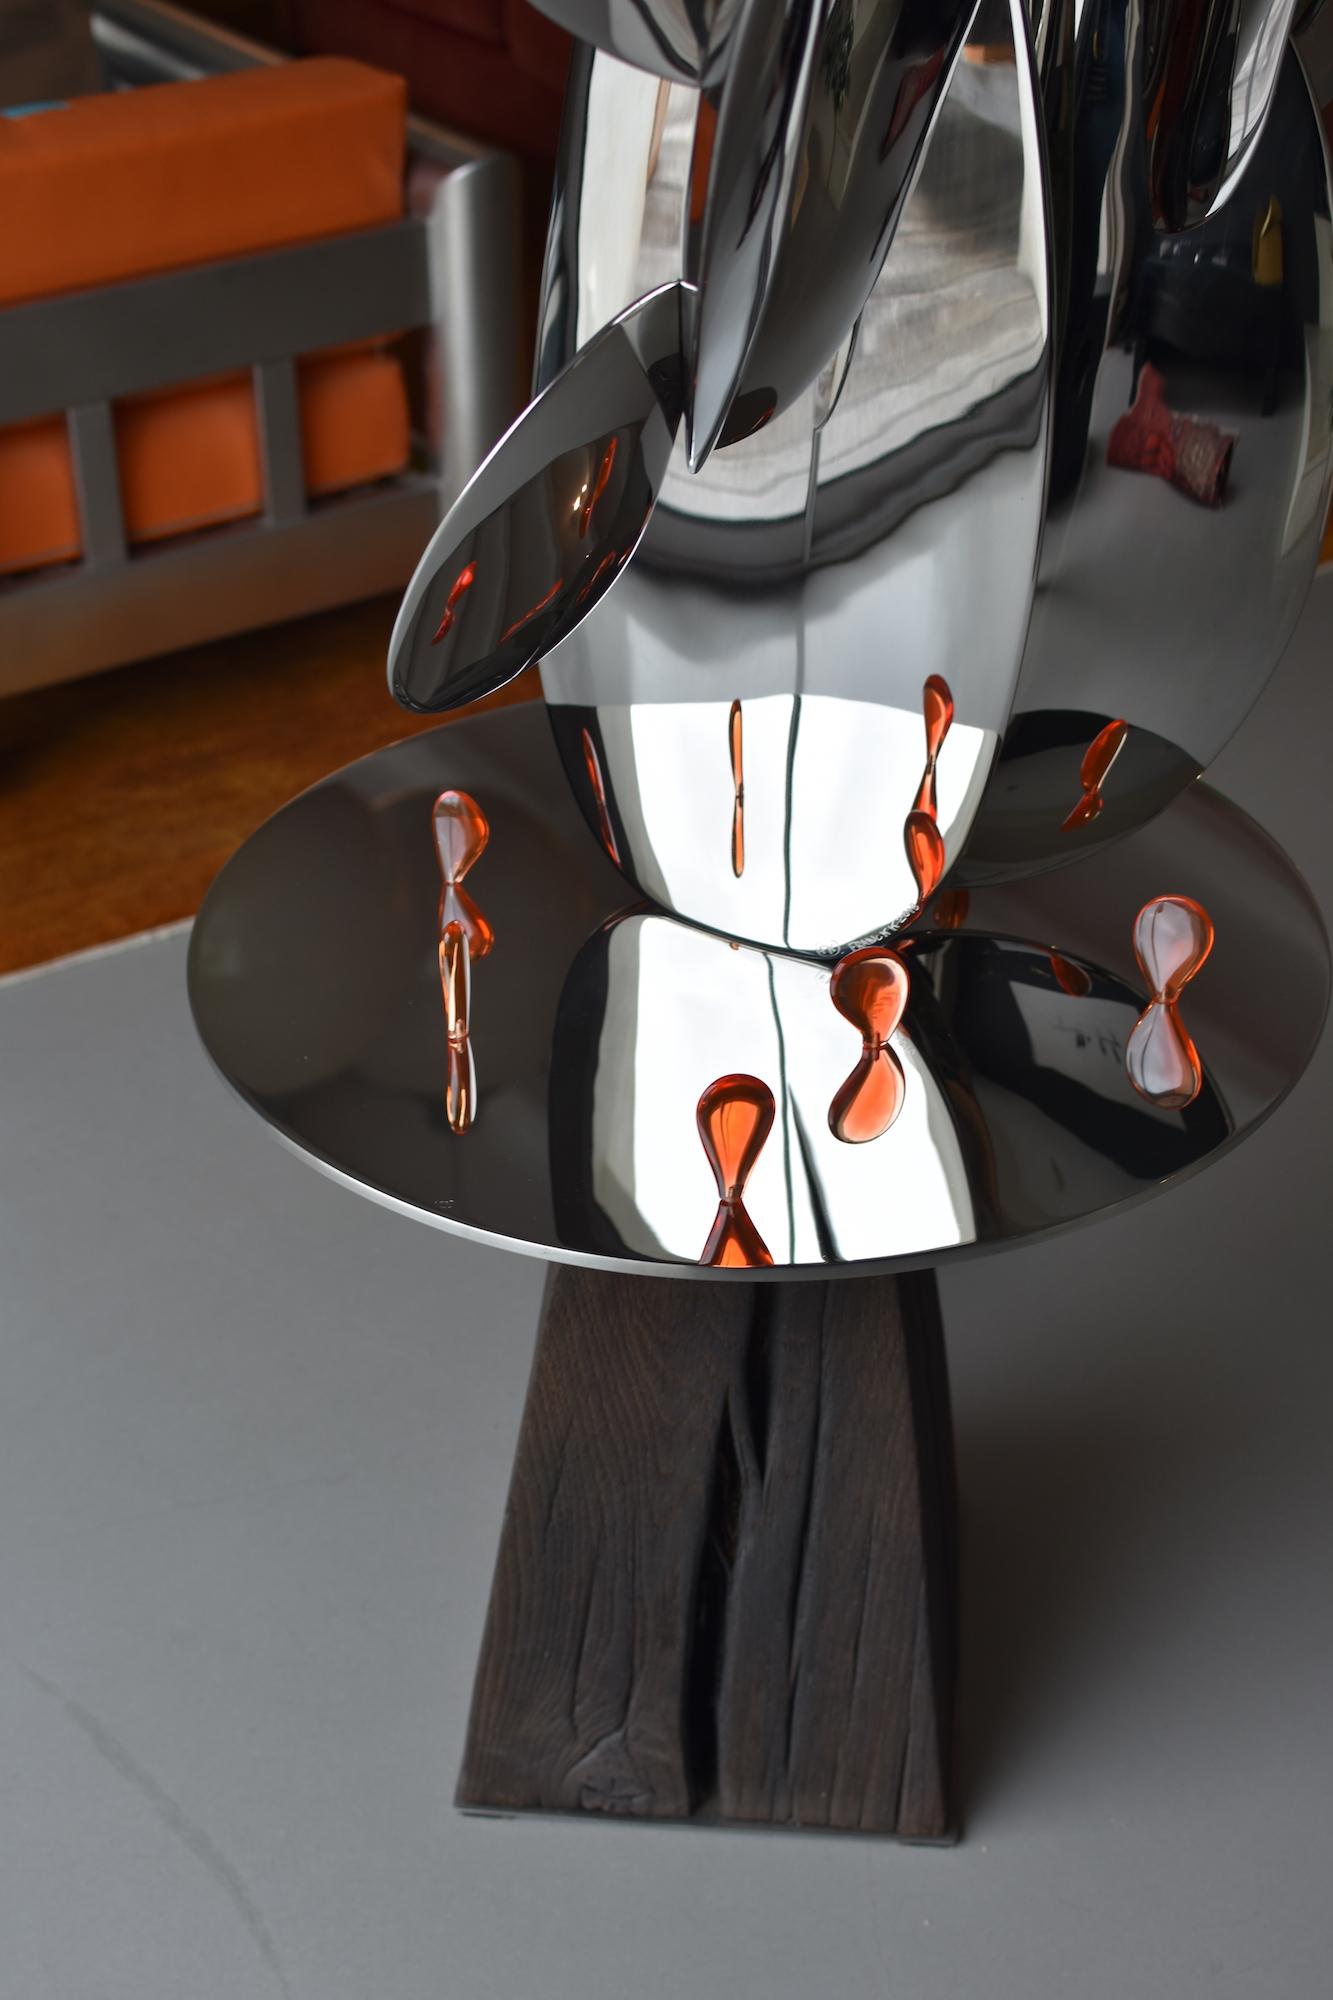 Kaktus by Franck K - Stainless steel sculpture, reflections, light, vision For Sale 8